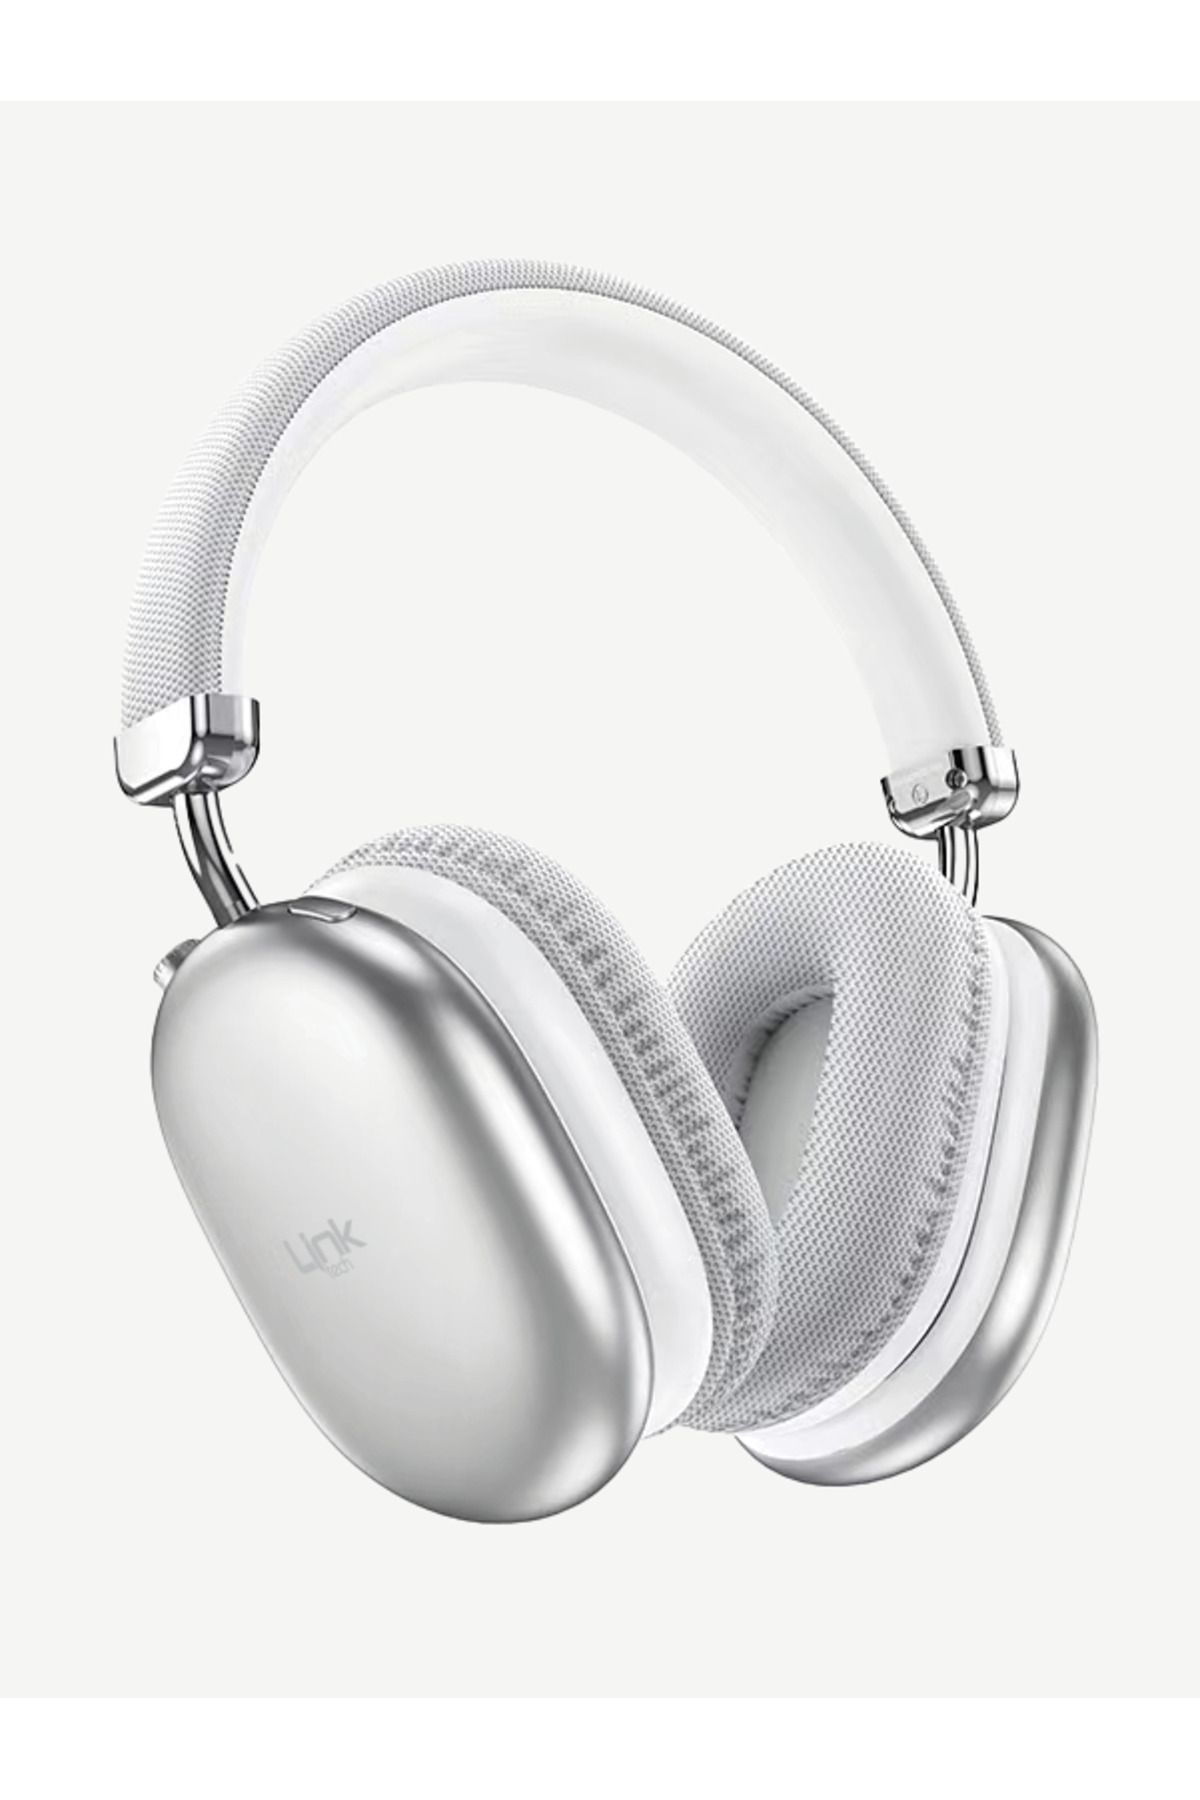 Linktech HP5 Kulak Üstü ANC Bluetooth Kulaklık